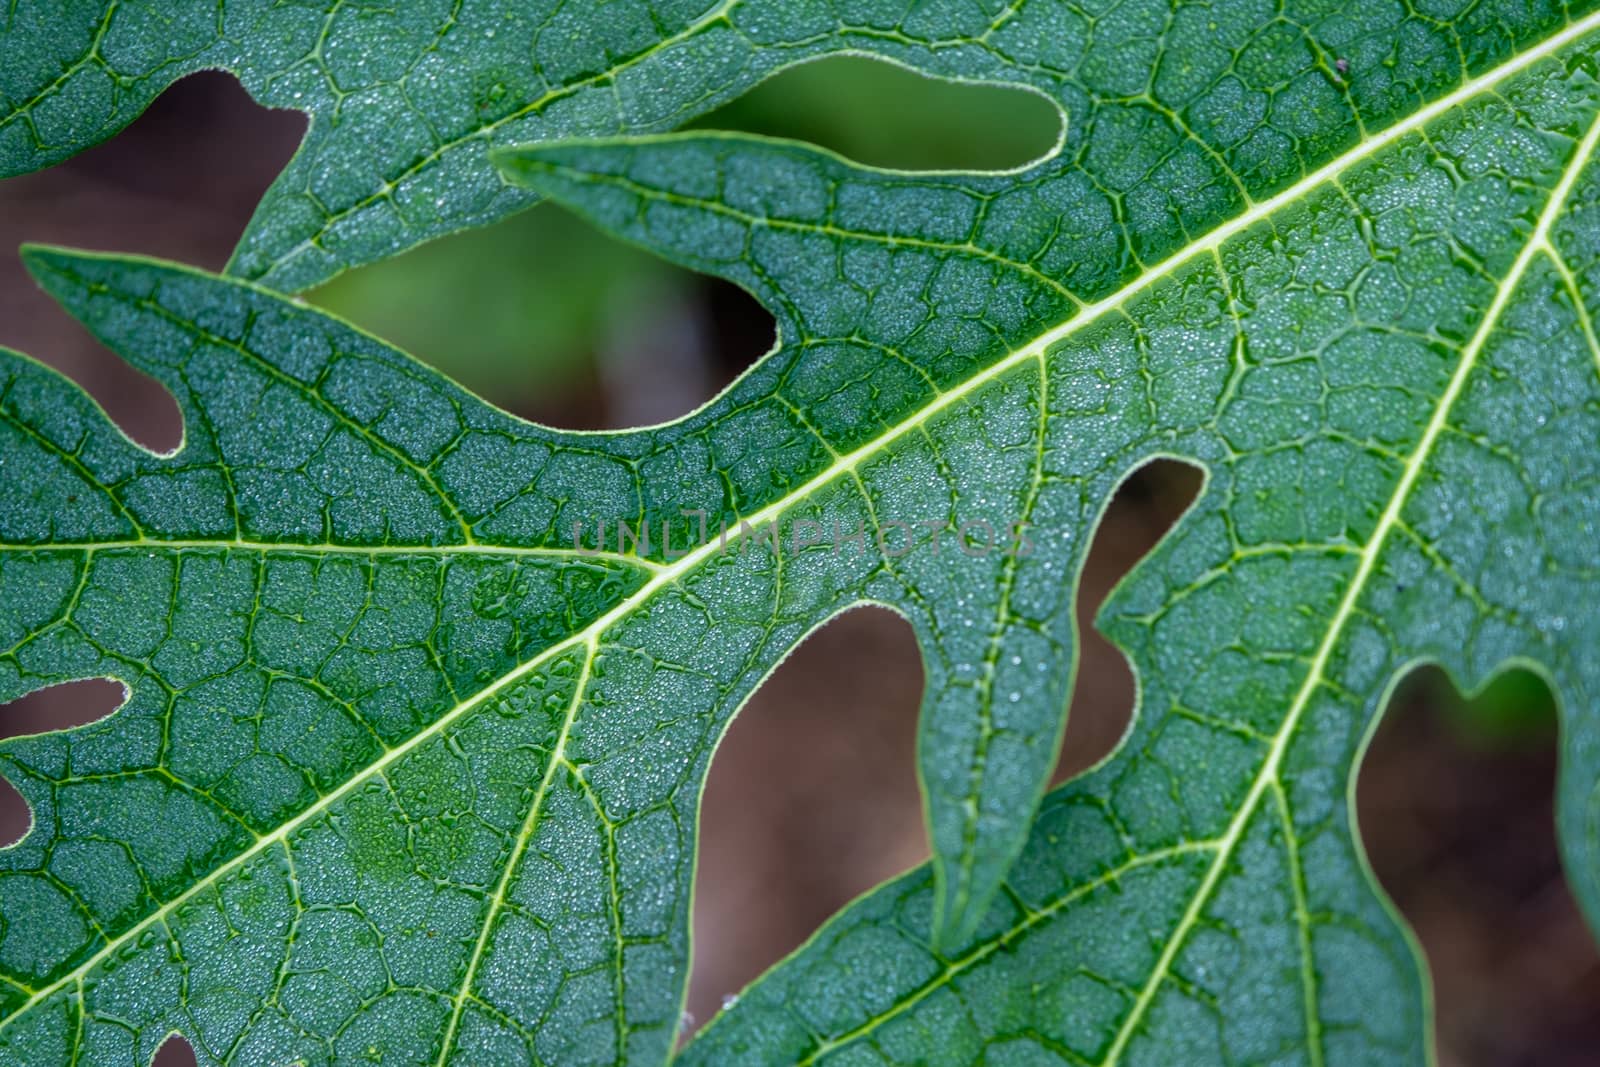 Rain drop on papaya leaf background show pattern With shadow edge, select focus